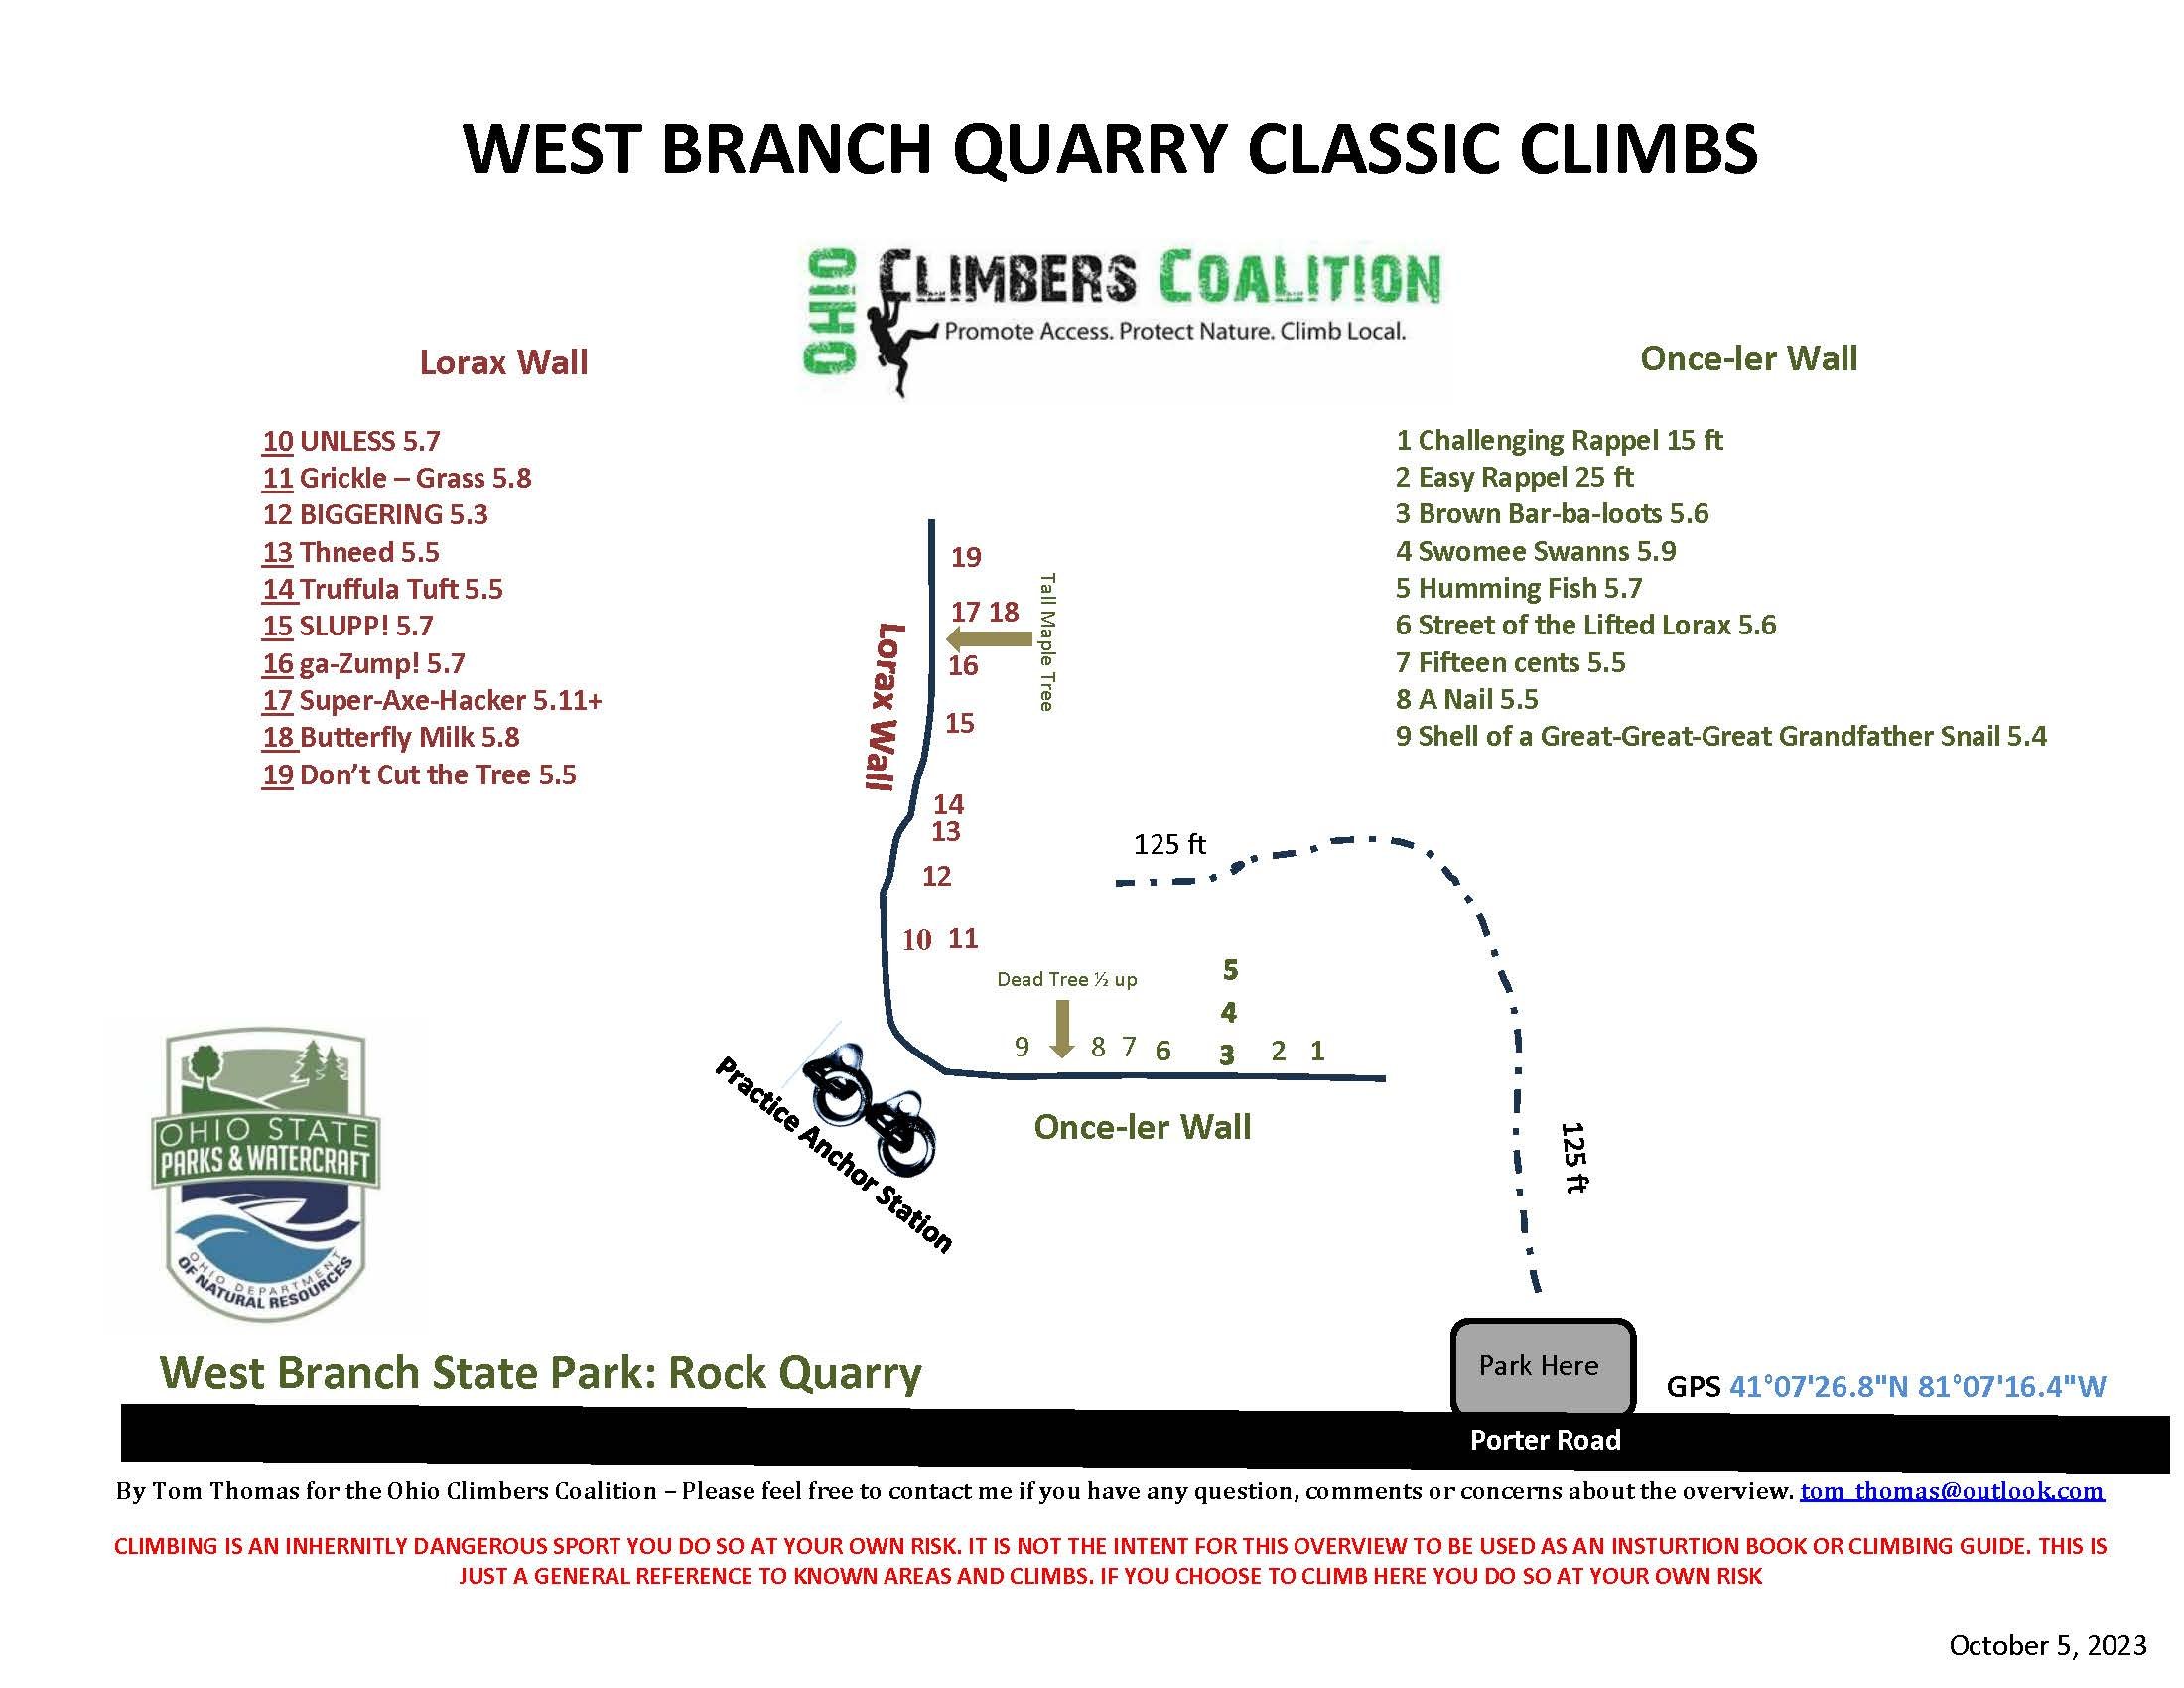 WEST BRANCH QUARRY Map 10-5-23.jpg